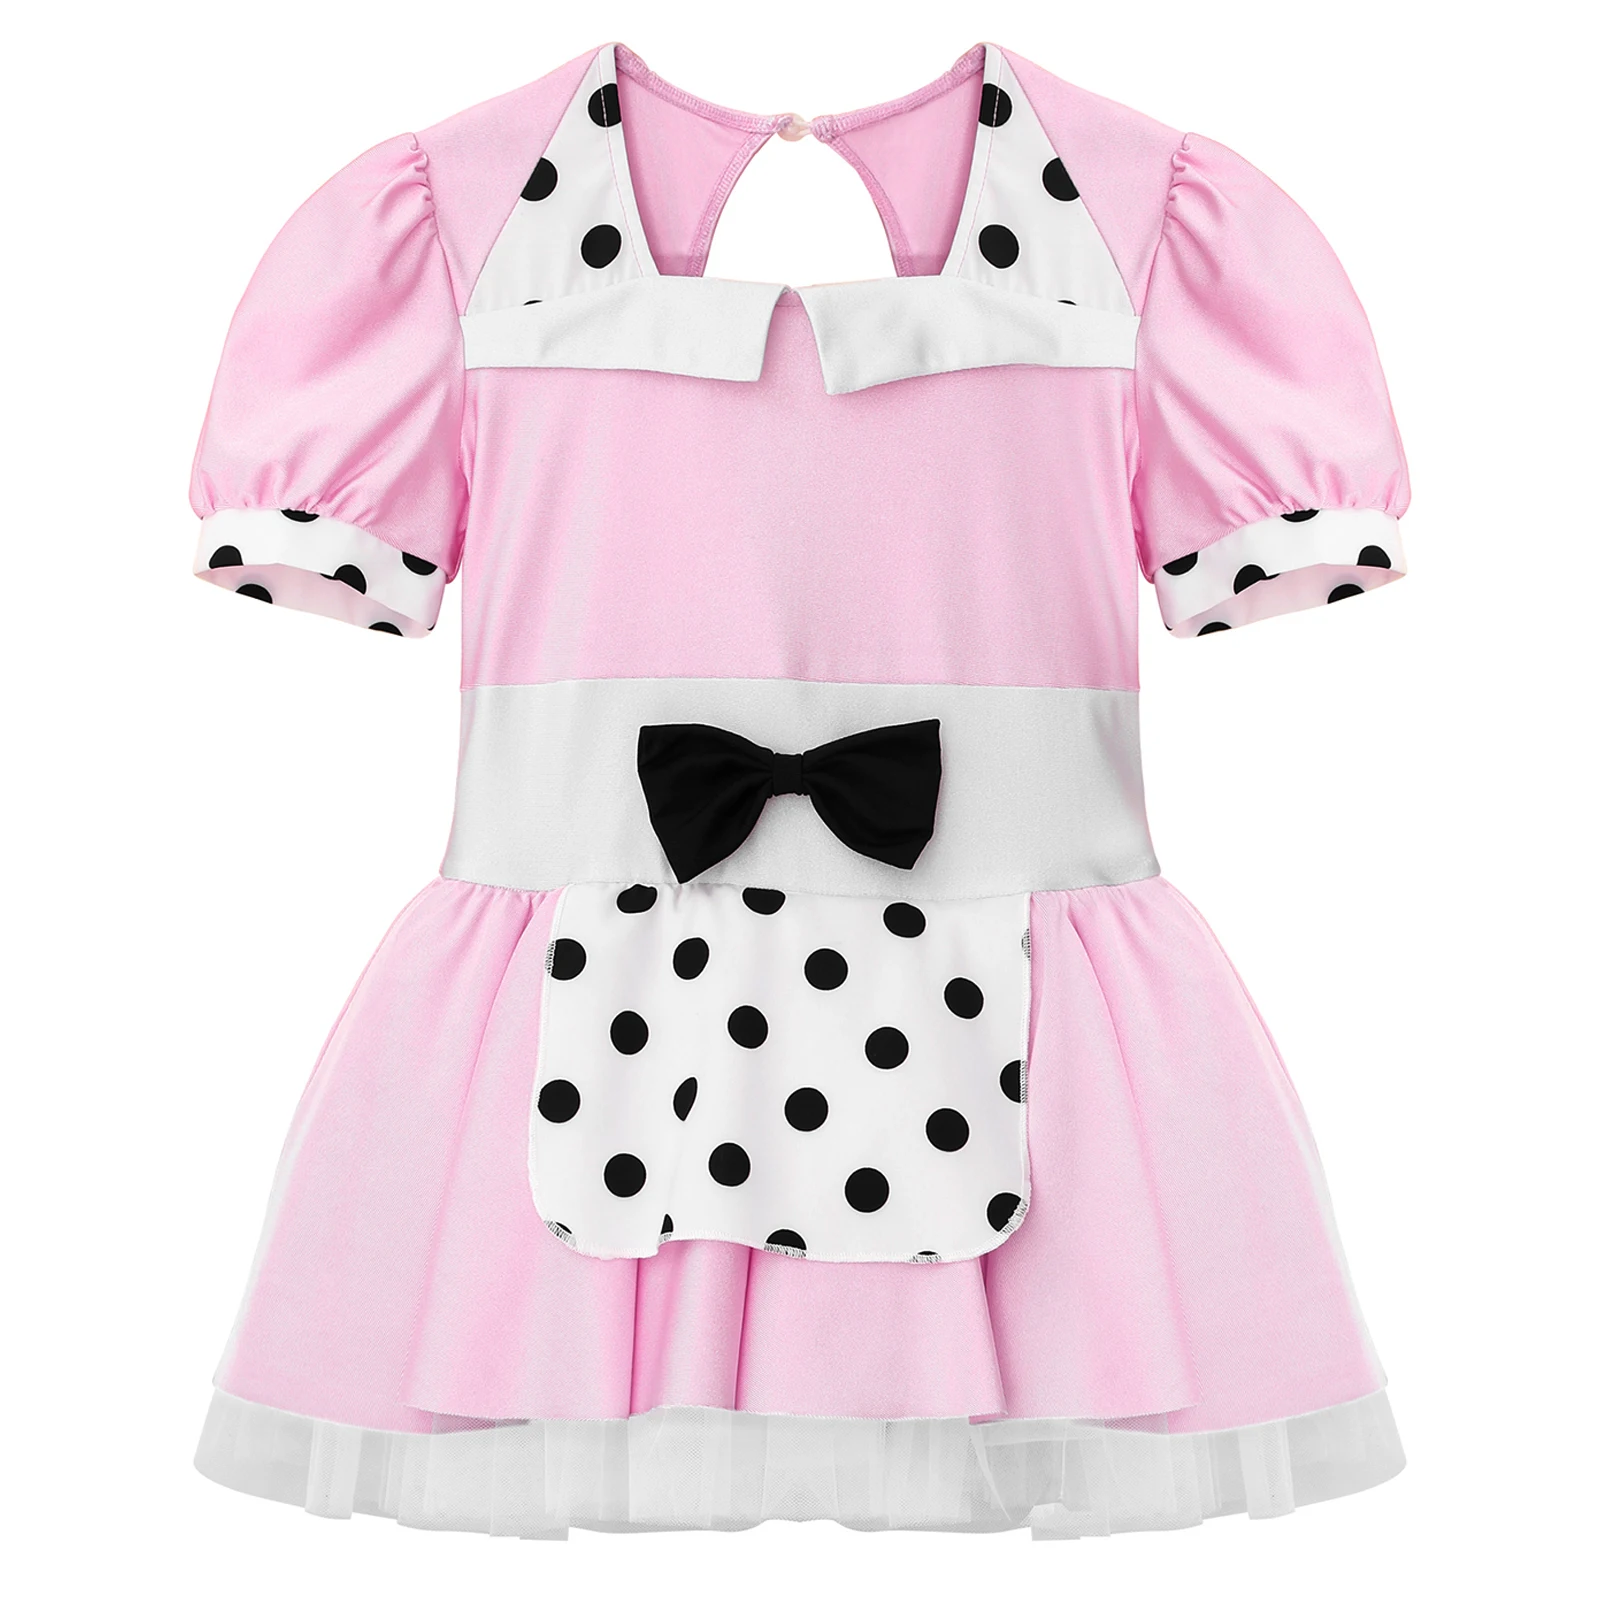 Kids Girls Stylish Clothing Short Sleeve Patchwork Style Polka Dots Print Bowknot Decorated Tutu Mesh Dance Dress